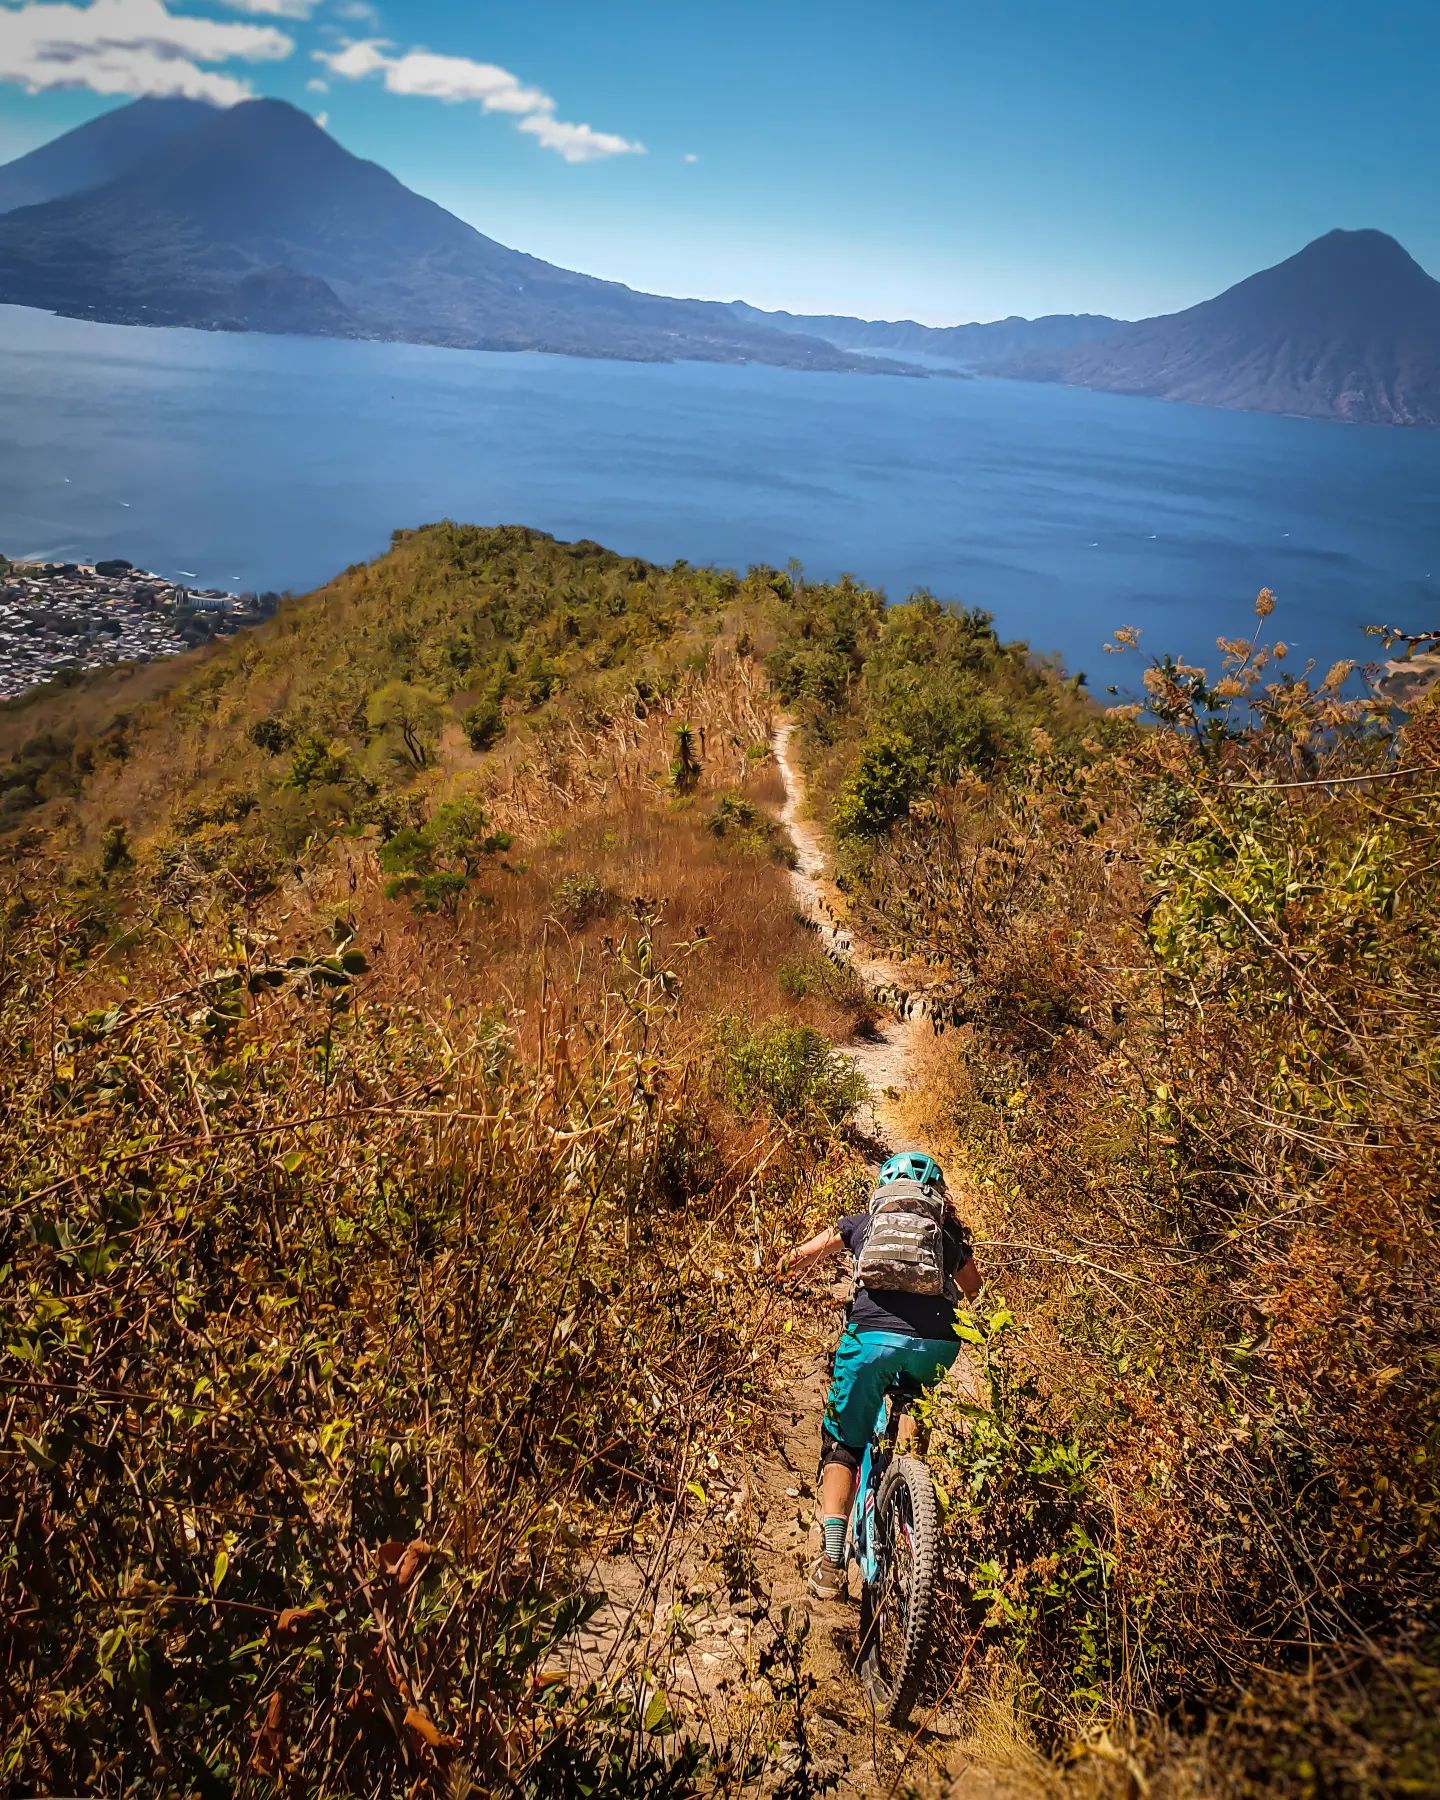 Atitlán Trails 🏞️ Próxima salida Sábado 29 Ene. Conectaremos una ruta desde nuestro centro en Tecpán hacia el Lago. Todo día todo incluído (ida y vuelta) Guías, comidas, transporte, vistas 😉....#mtbtours #mtbtravel #guatemala🇬🇹 #getout #enduromtb #gorideyourbike #guate #mtblife #lakeatitlan #lagodeatitlan #explore #downhillmtb #biketravel #bikelife #bikeviews #mtbguatemala #biketours #travelmore #adventure #adventuremtb #mtbtheworld